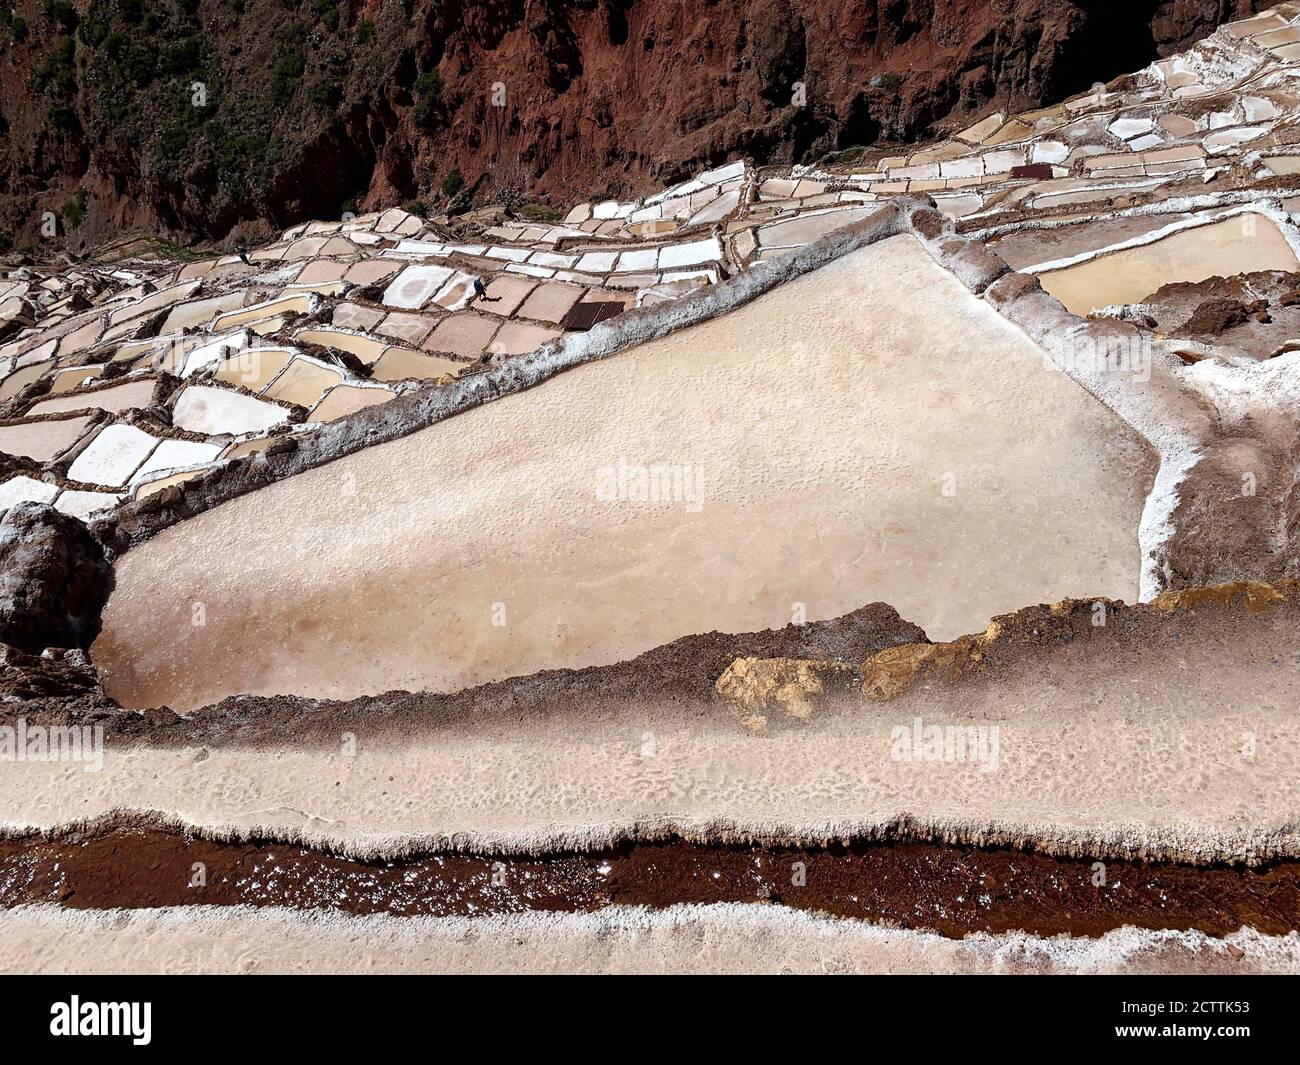 Salzbergwerke in Maras, Peru. Salineras de Maras, Anden. Riesige Salzpfanne. Berühmte peruanische Salz.Heilige Tal der Inkas. Tolle Landschaft. Stockfoto